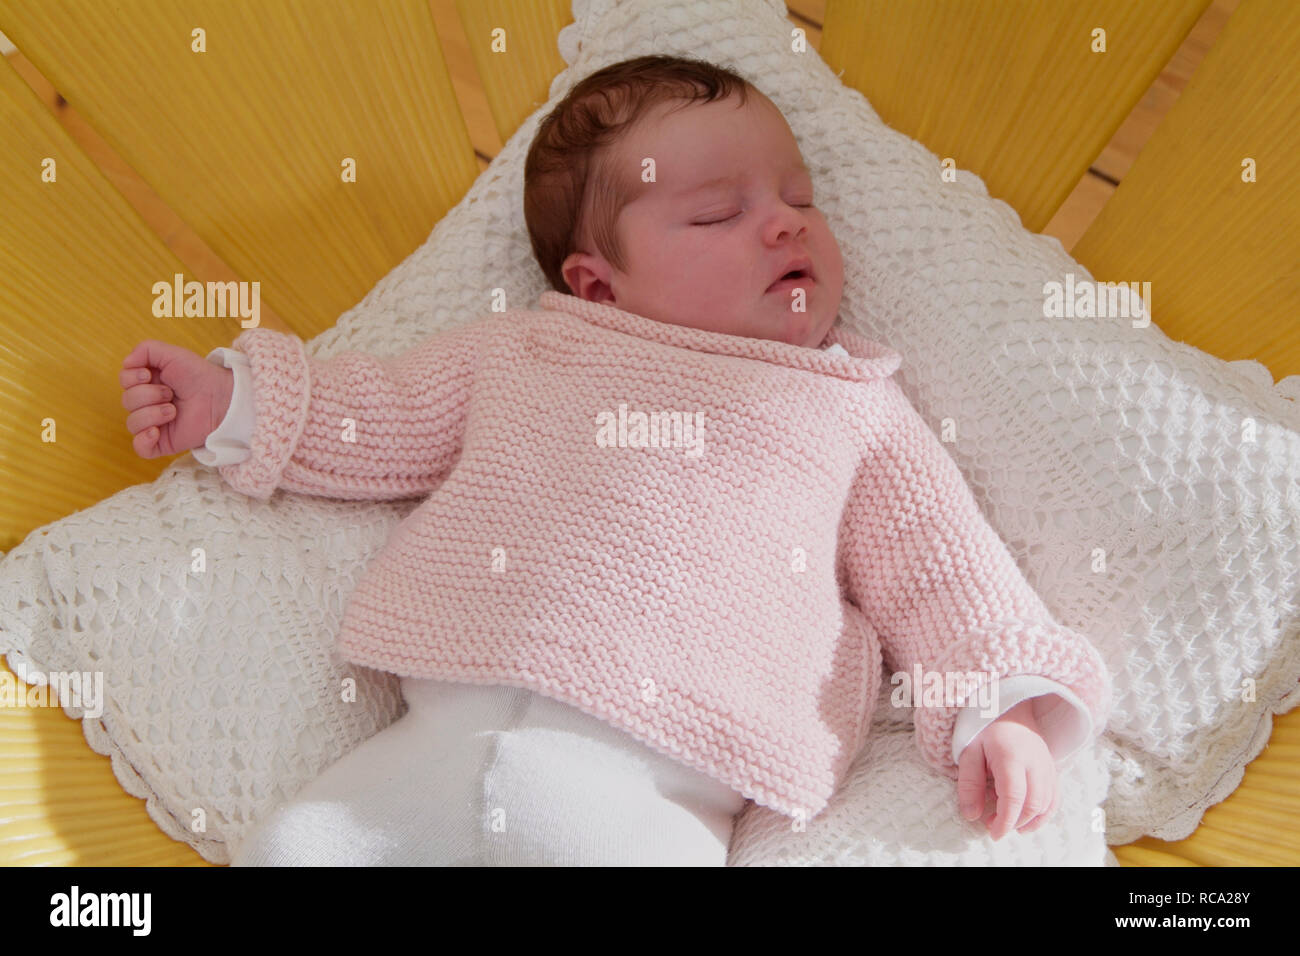 Neugeborenes Baby liegt auf einem Kissen, tipo das ist 12 Tage alt | new born baby giacente su di un cuscino - il bambino ist 12 giorni d'età. Foto Stock